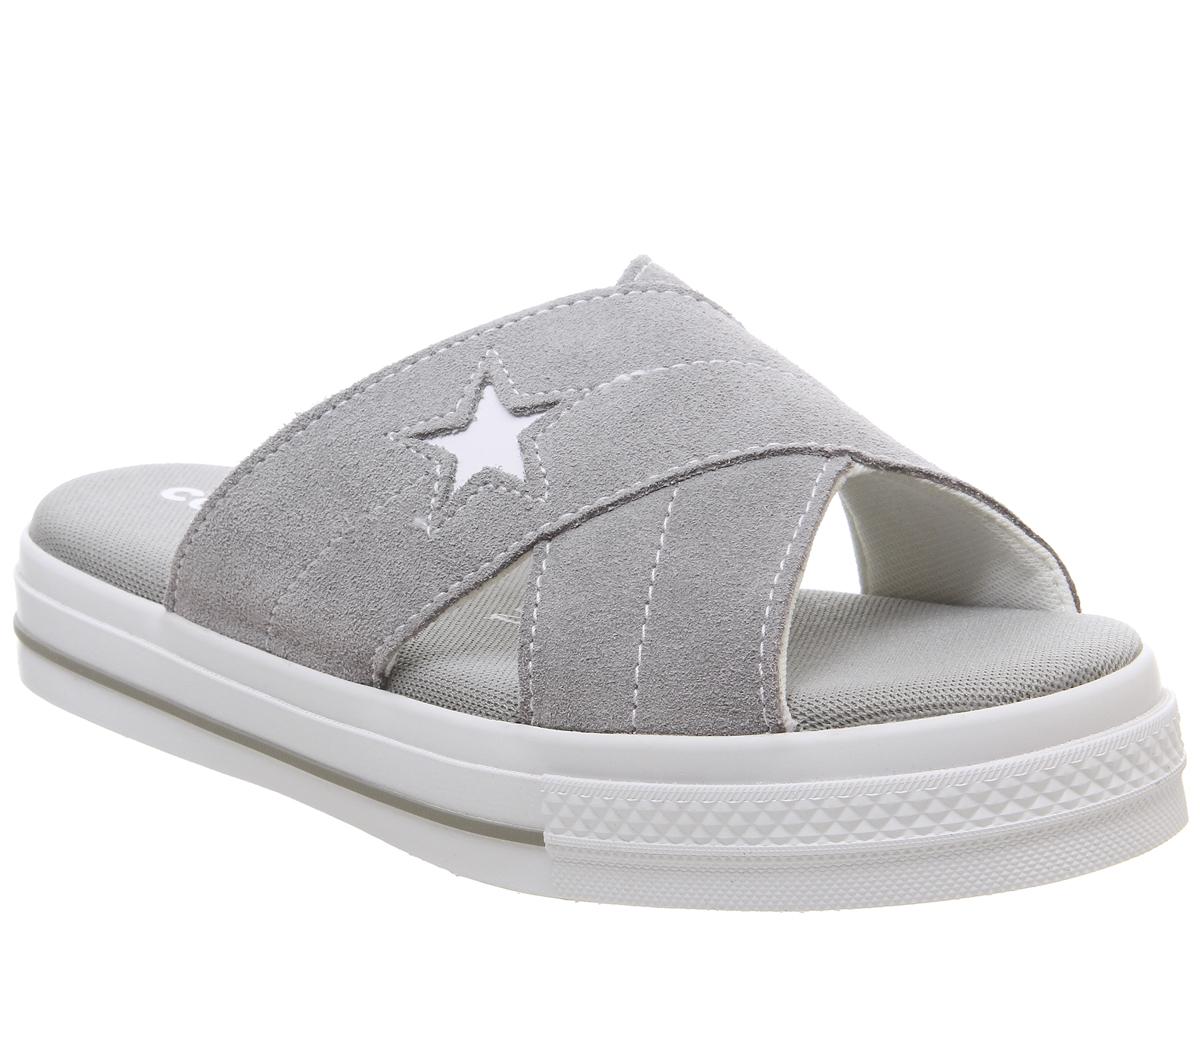 Converse Converse One Star Sandals Dolphin Egret White - Women’s Sandals